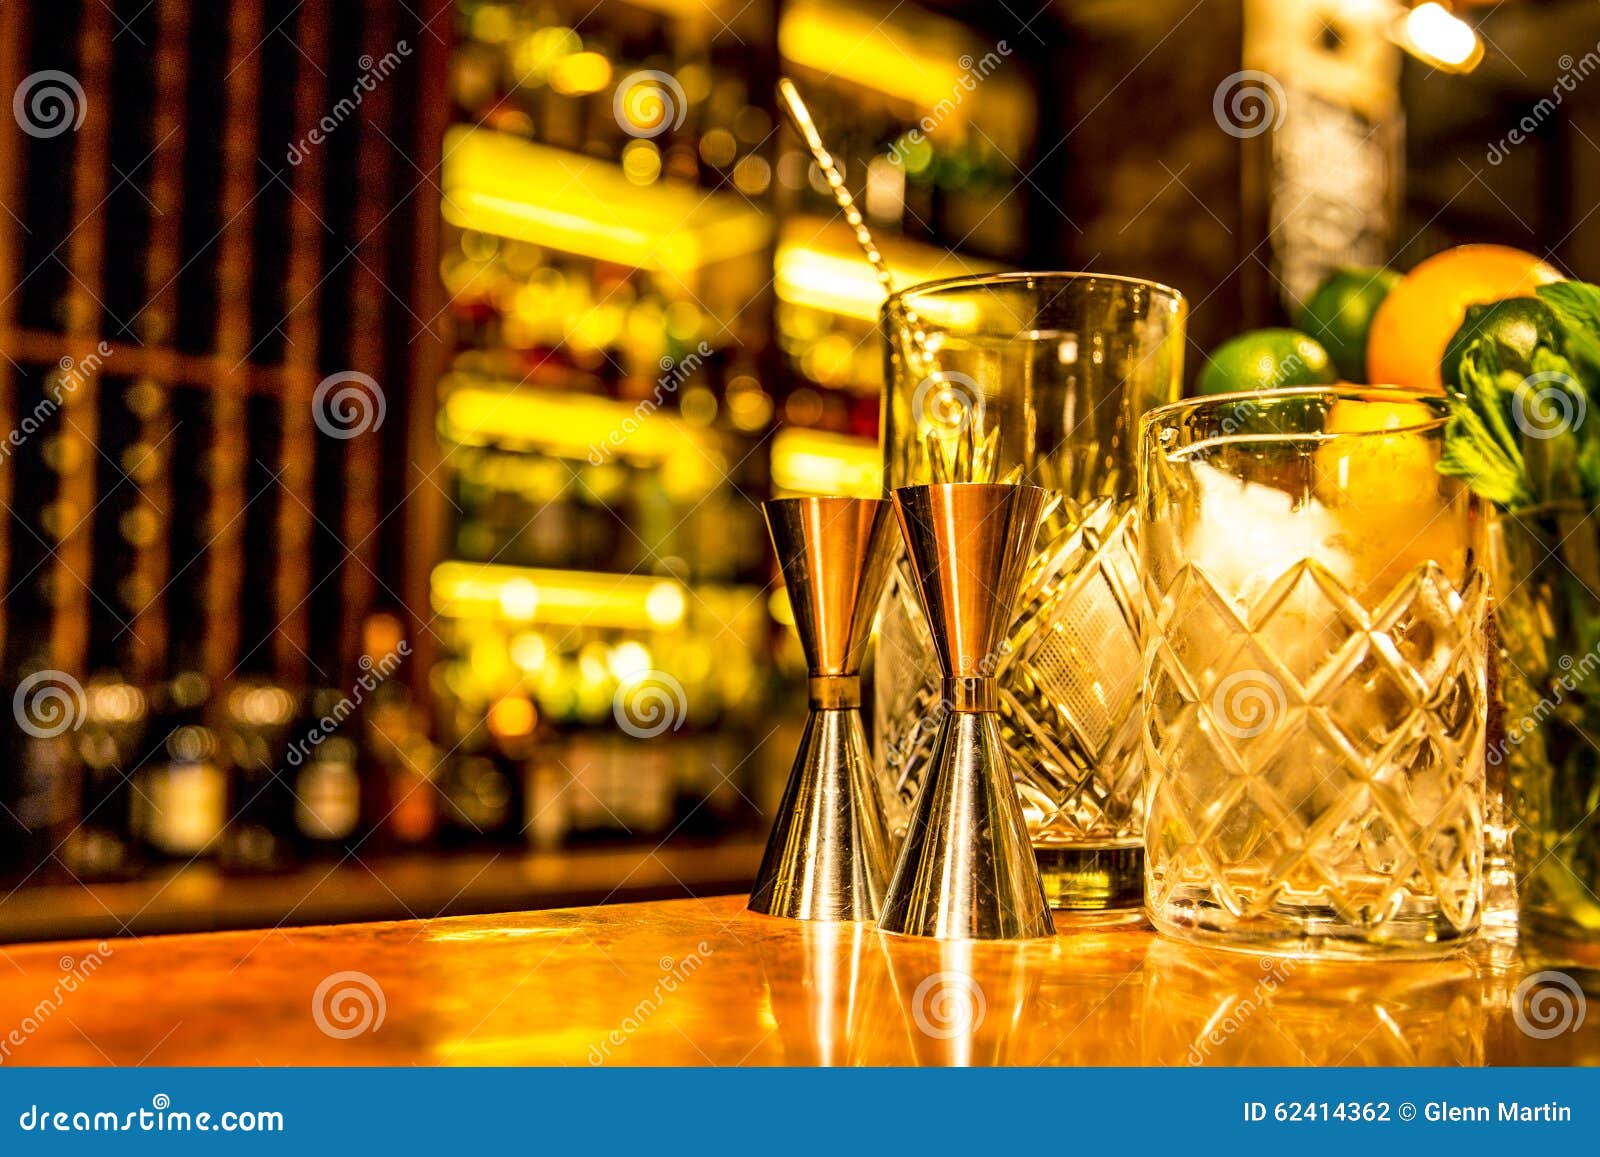 bar scene ready for a cocktail